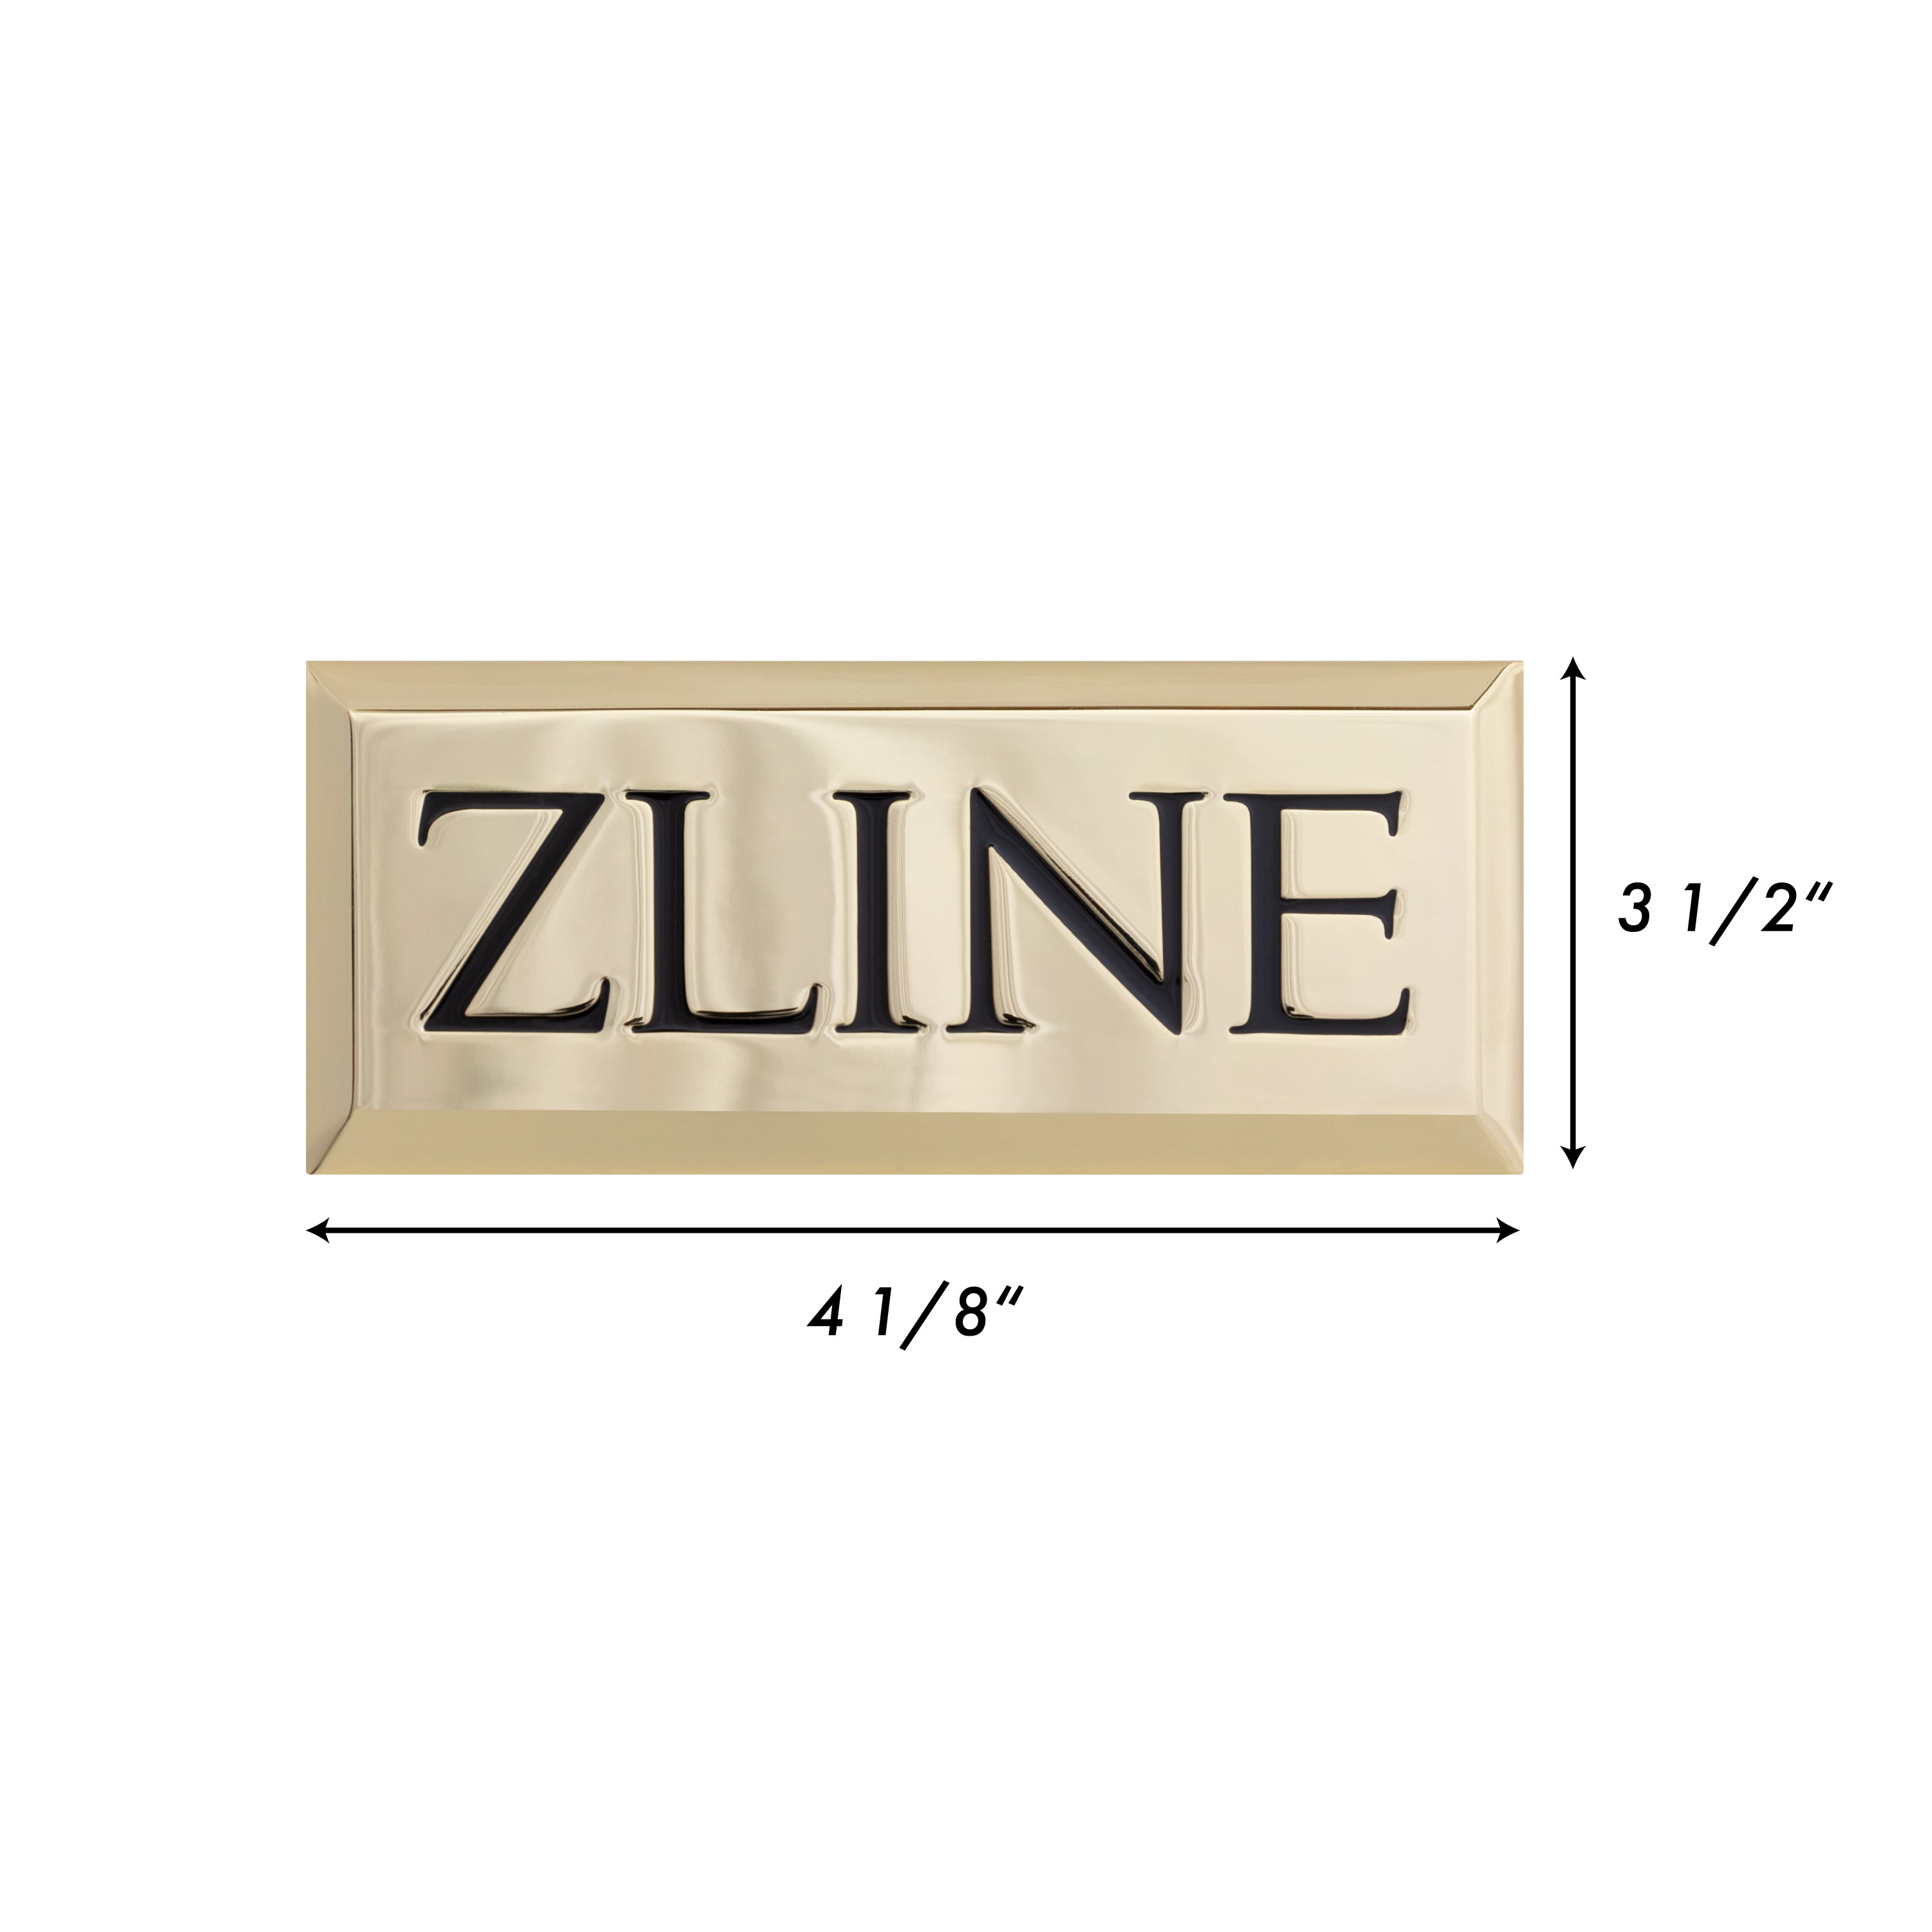 ZLINE Autograph Edition Badge Sample in Polished Gold